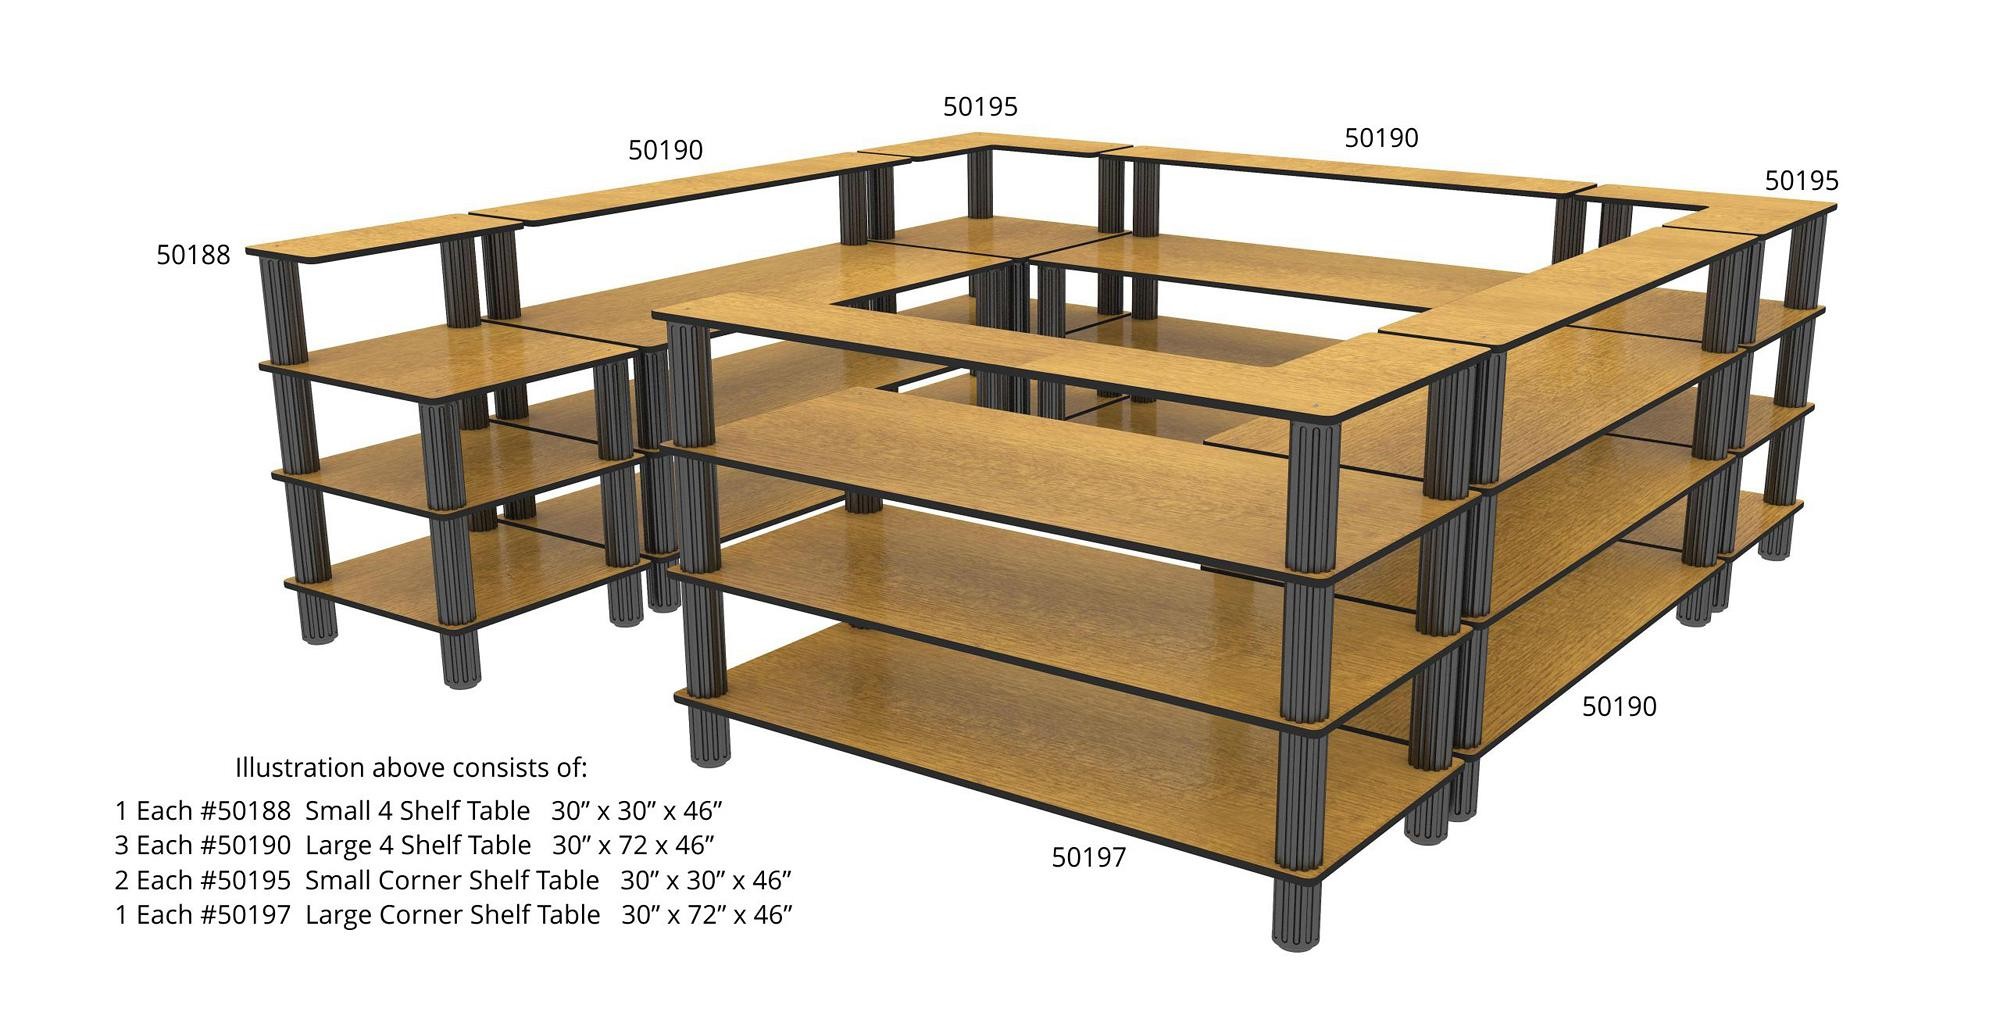 Bon Chef 50190LVWALNUT Large 4-Shelf Flex Table with Walnut Finish, 30" x 72" x 46"